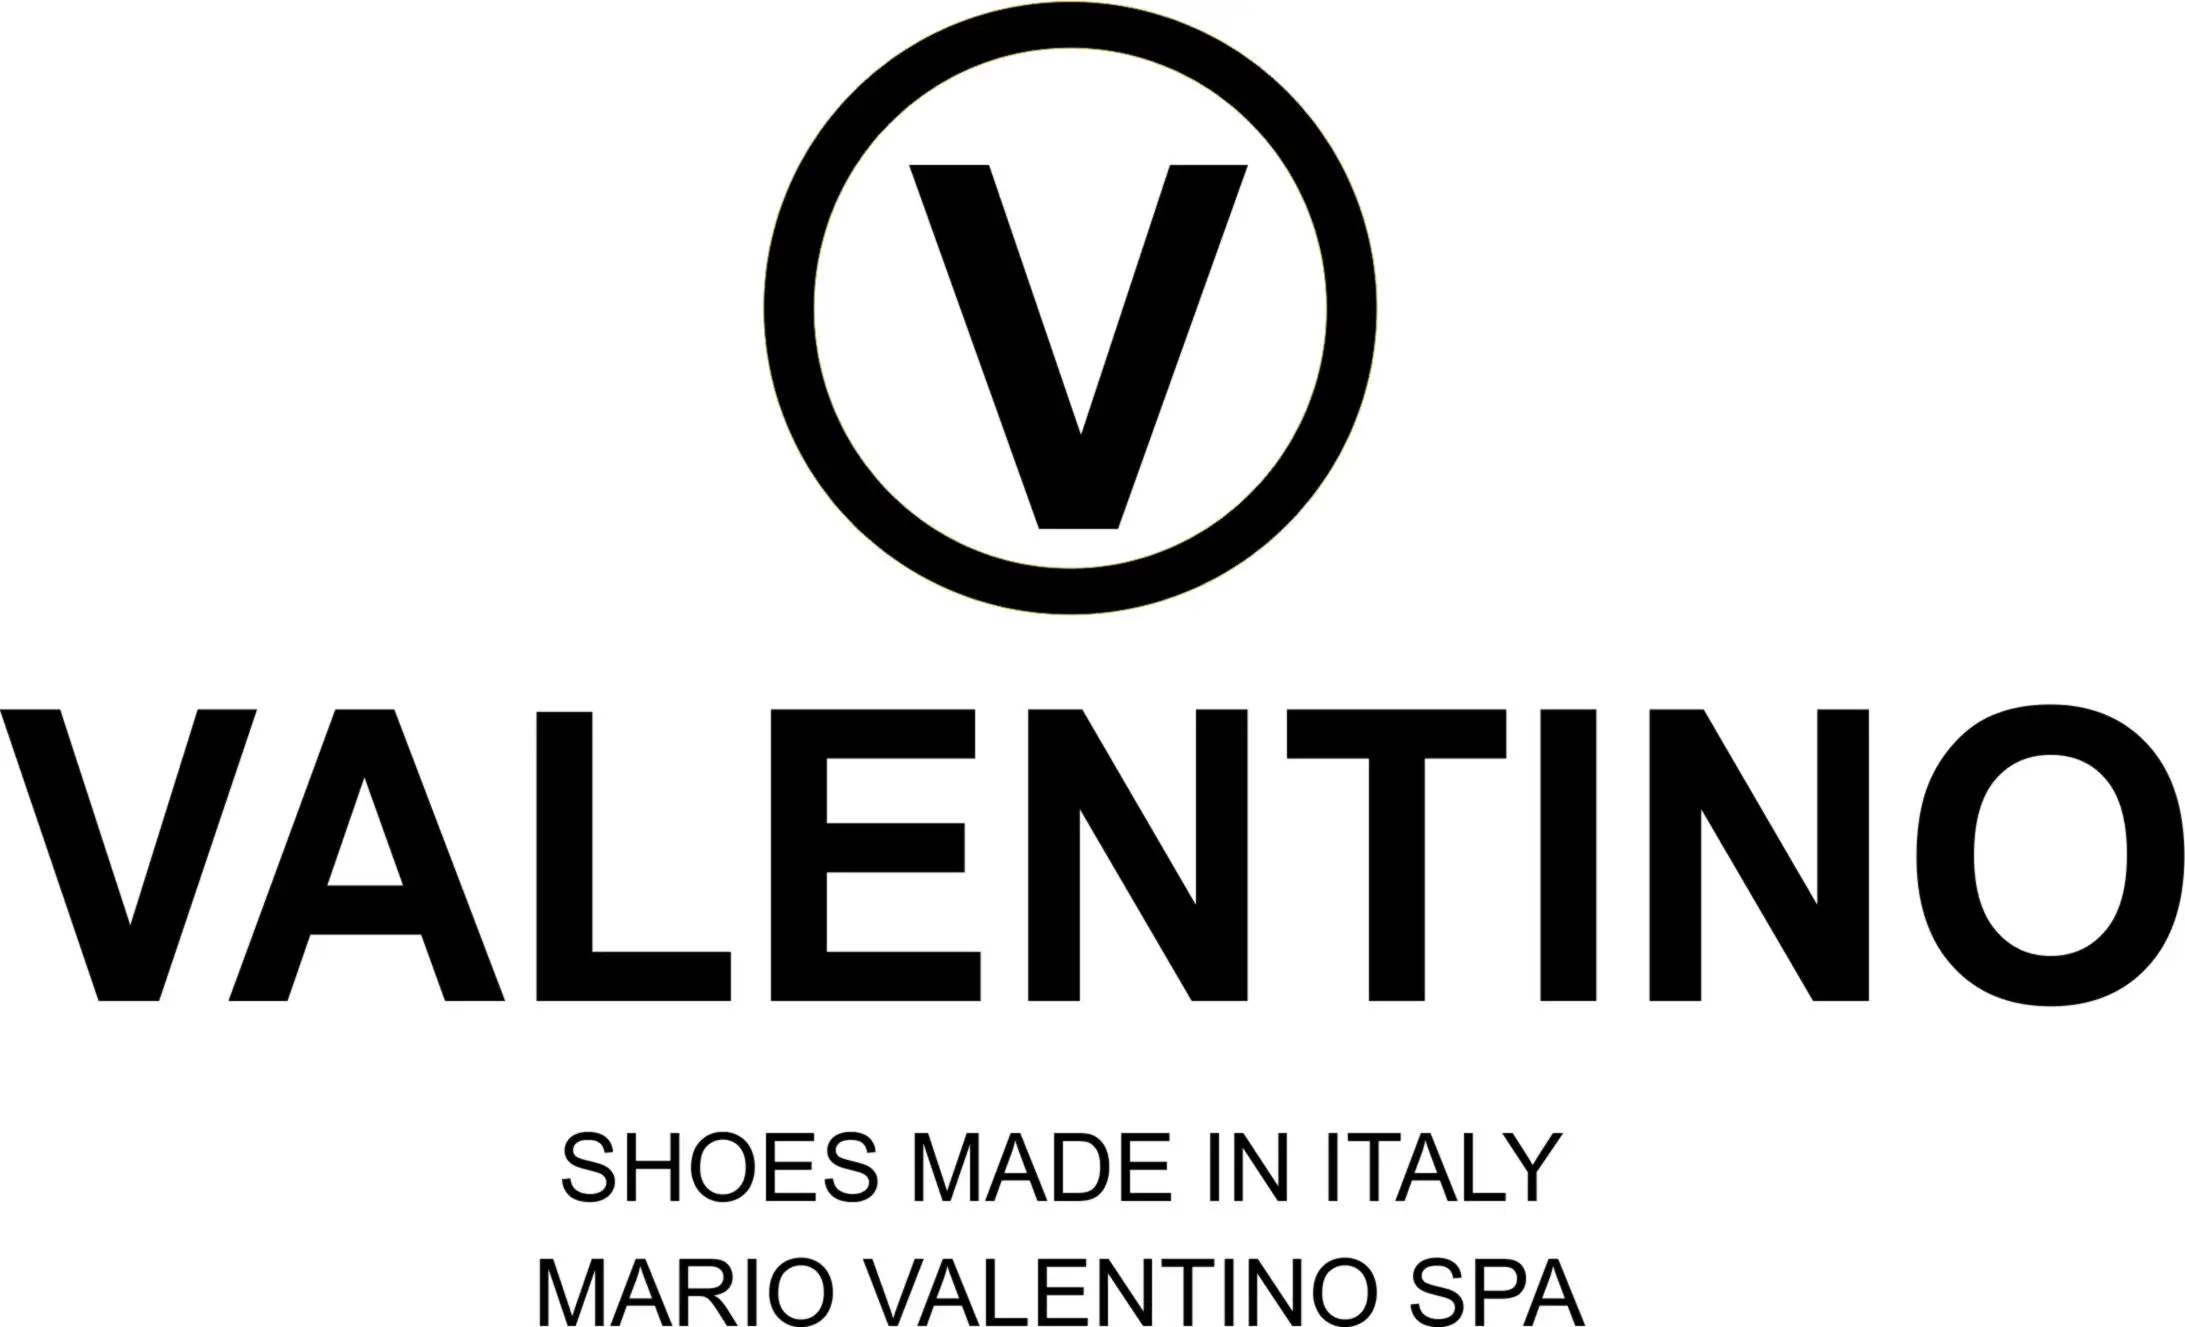 Mario Valentino Spa - SHOES, SNEAKERS